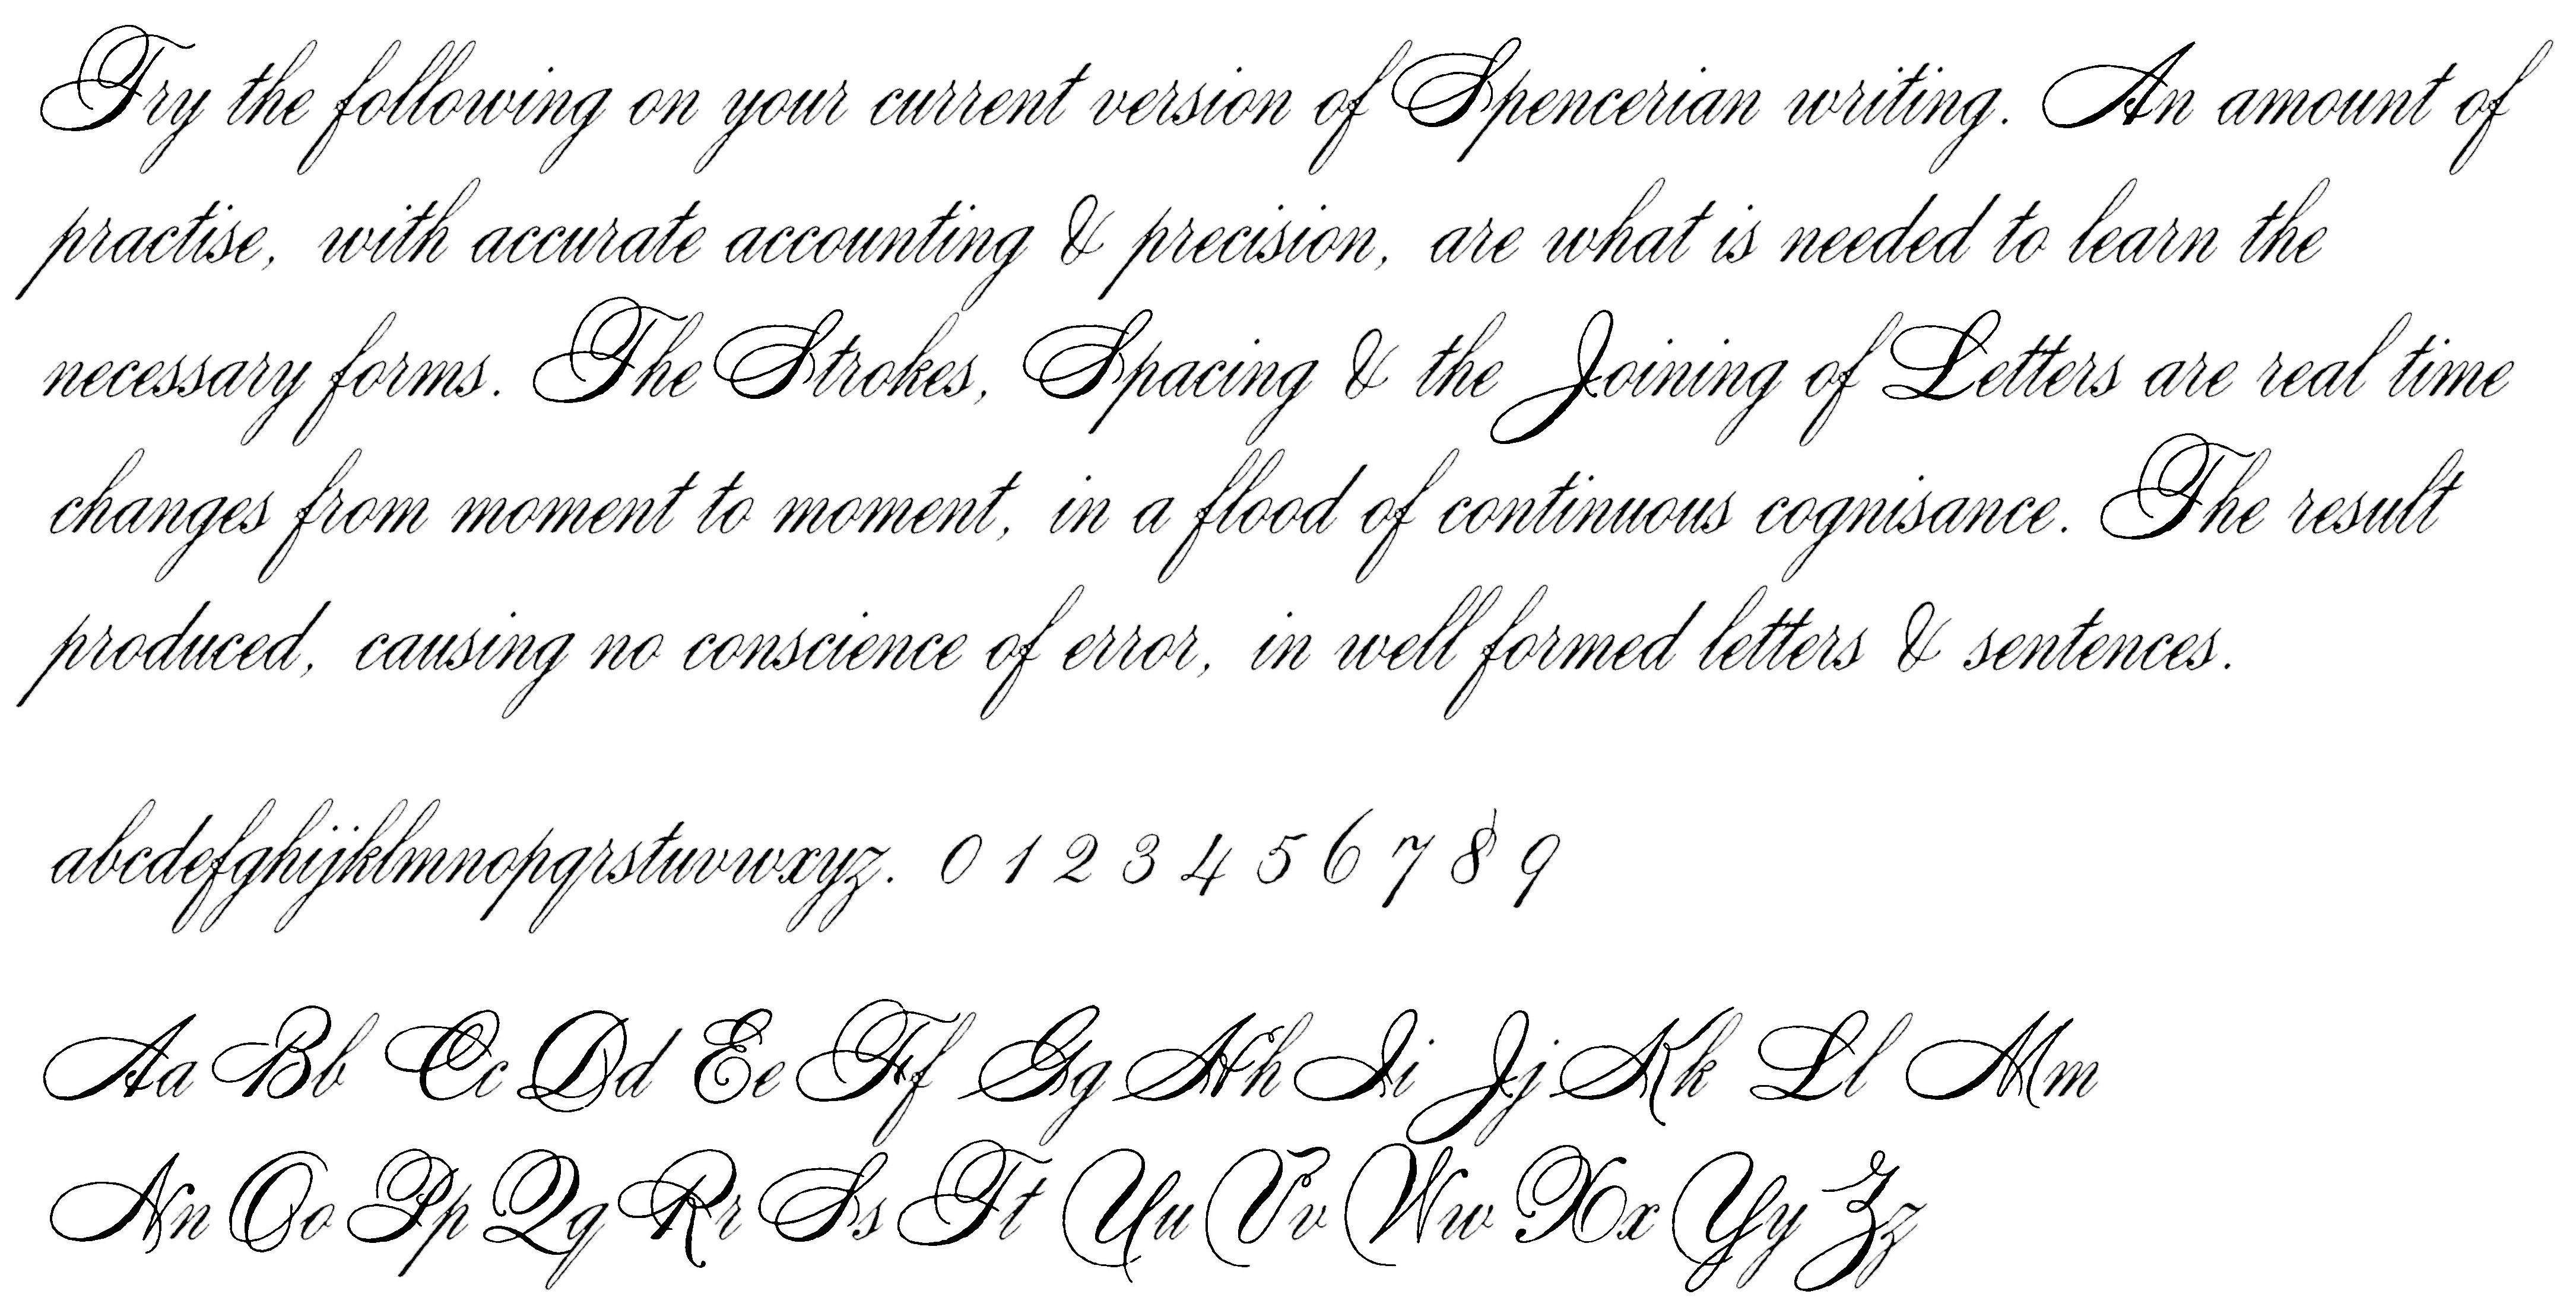 Spencerian font sample text